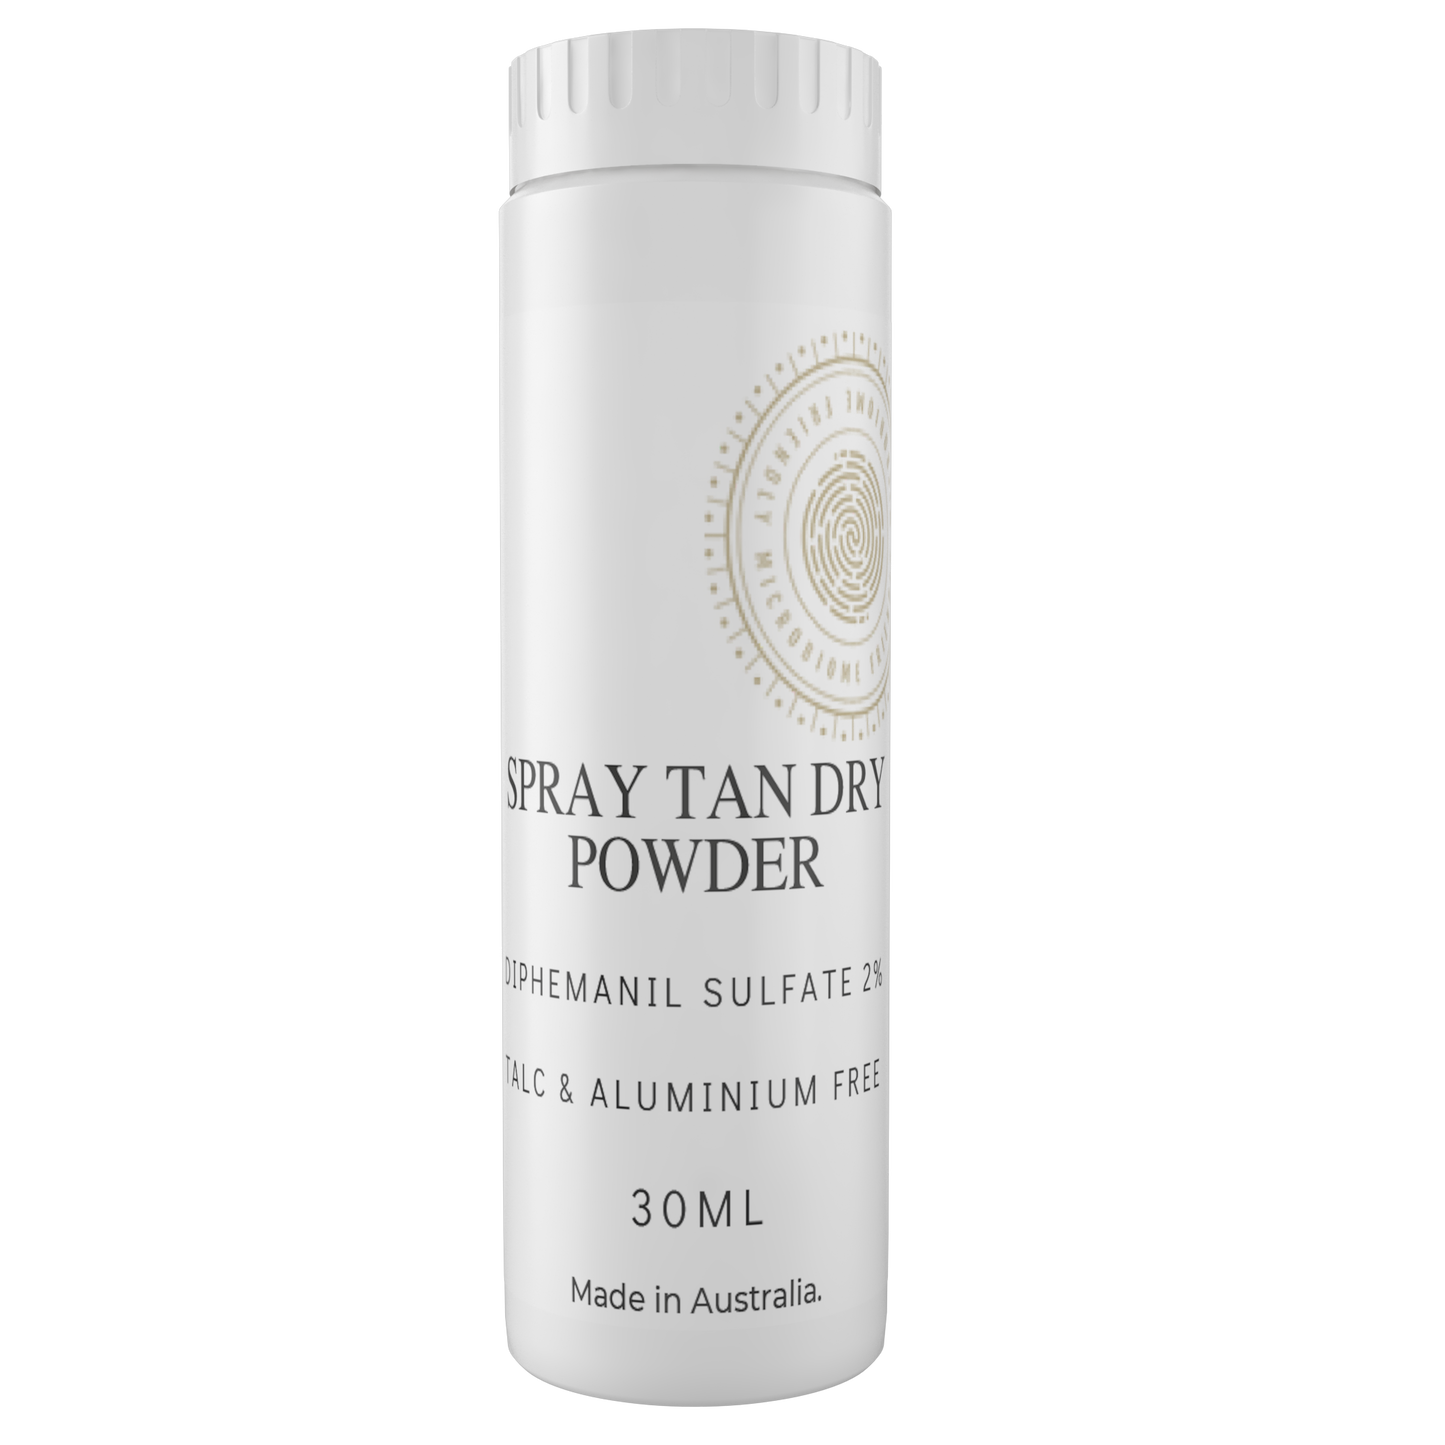 Spray Tan Dry Powder